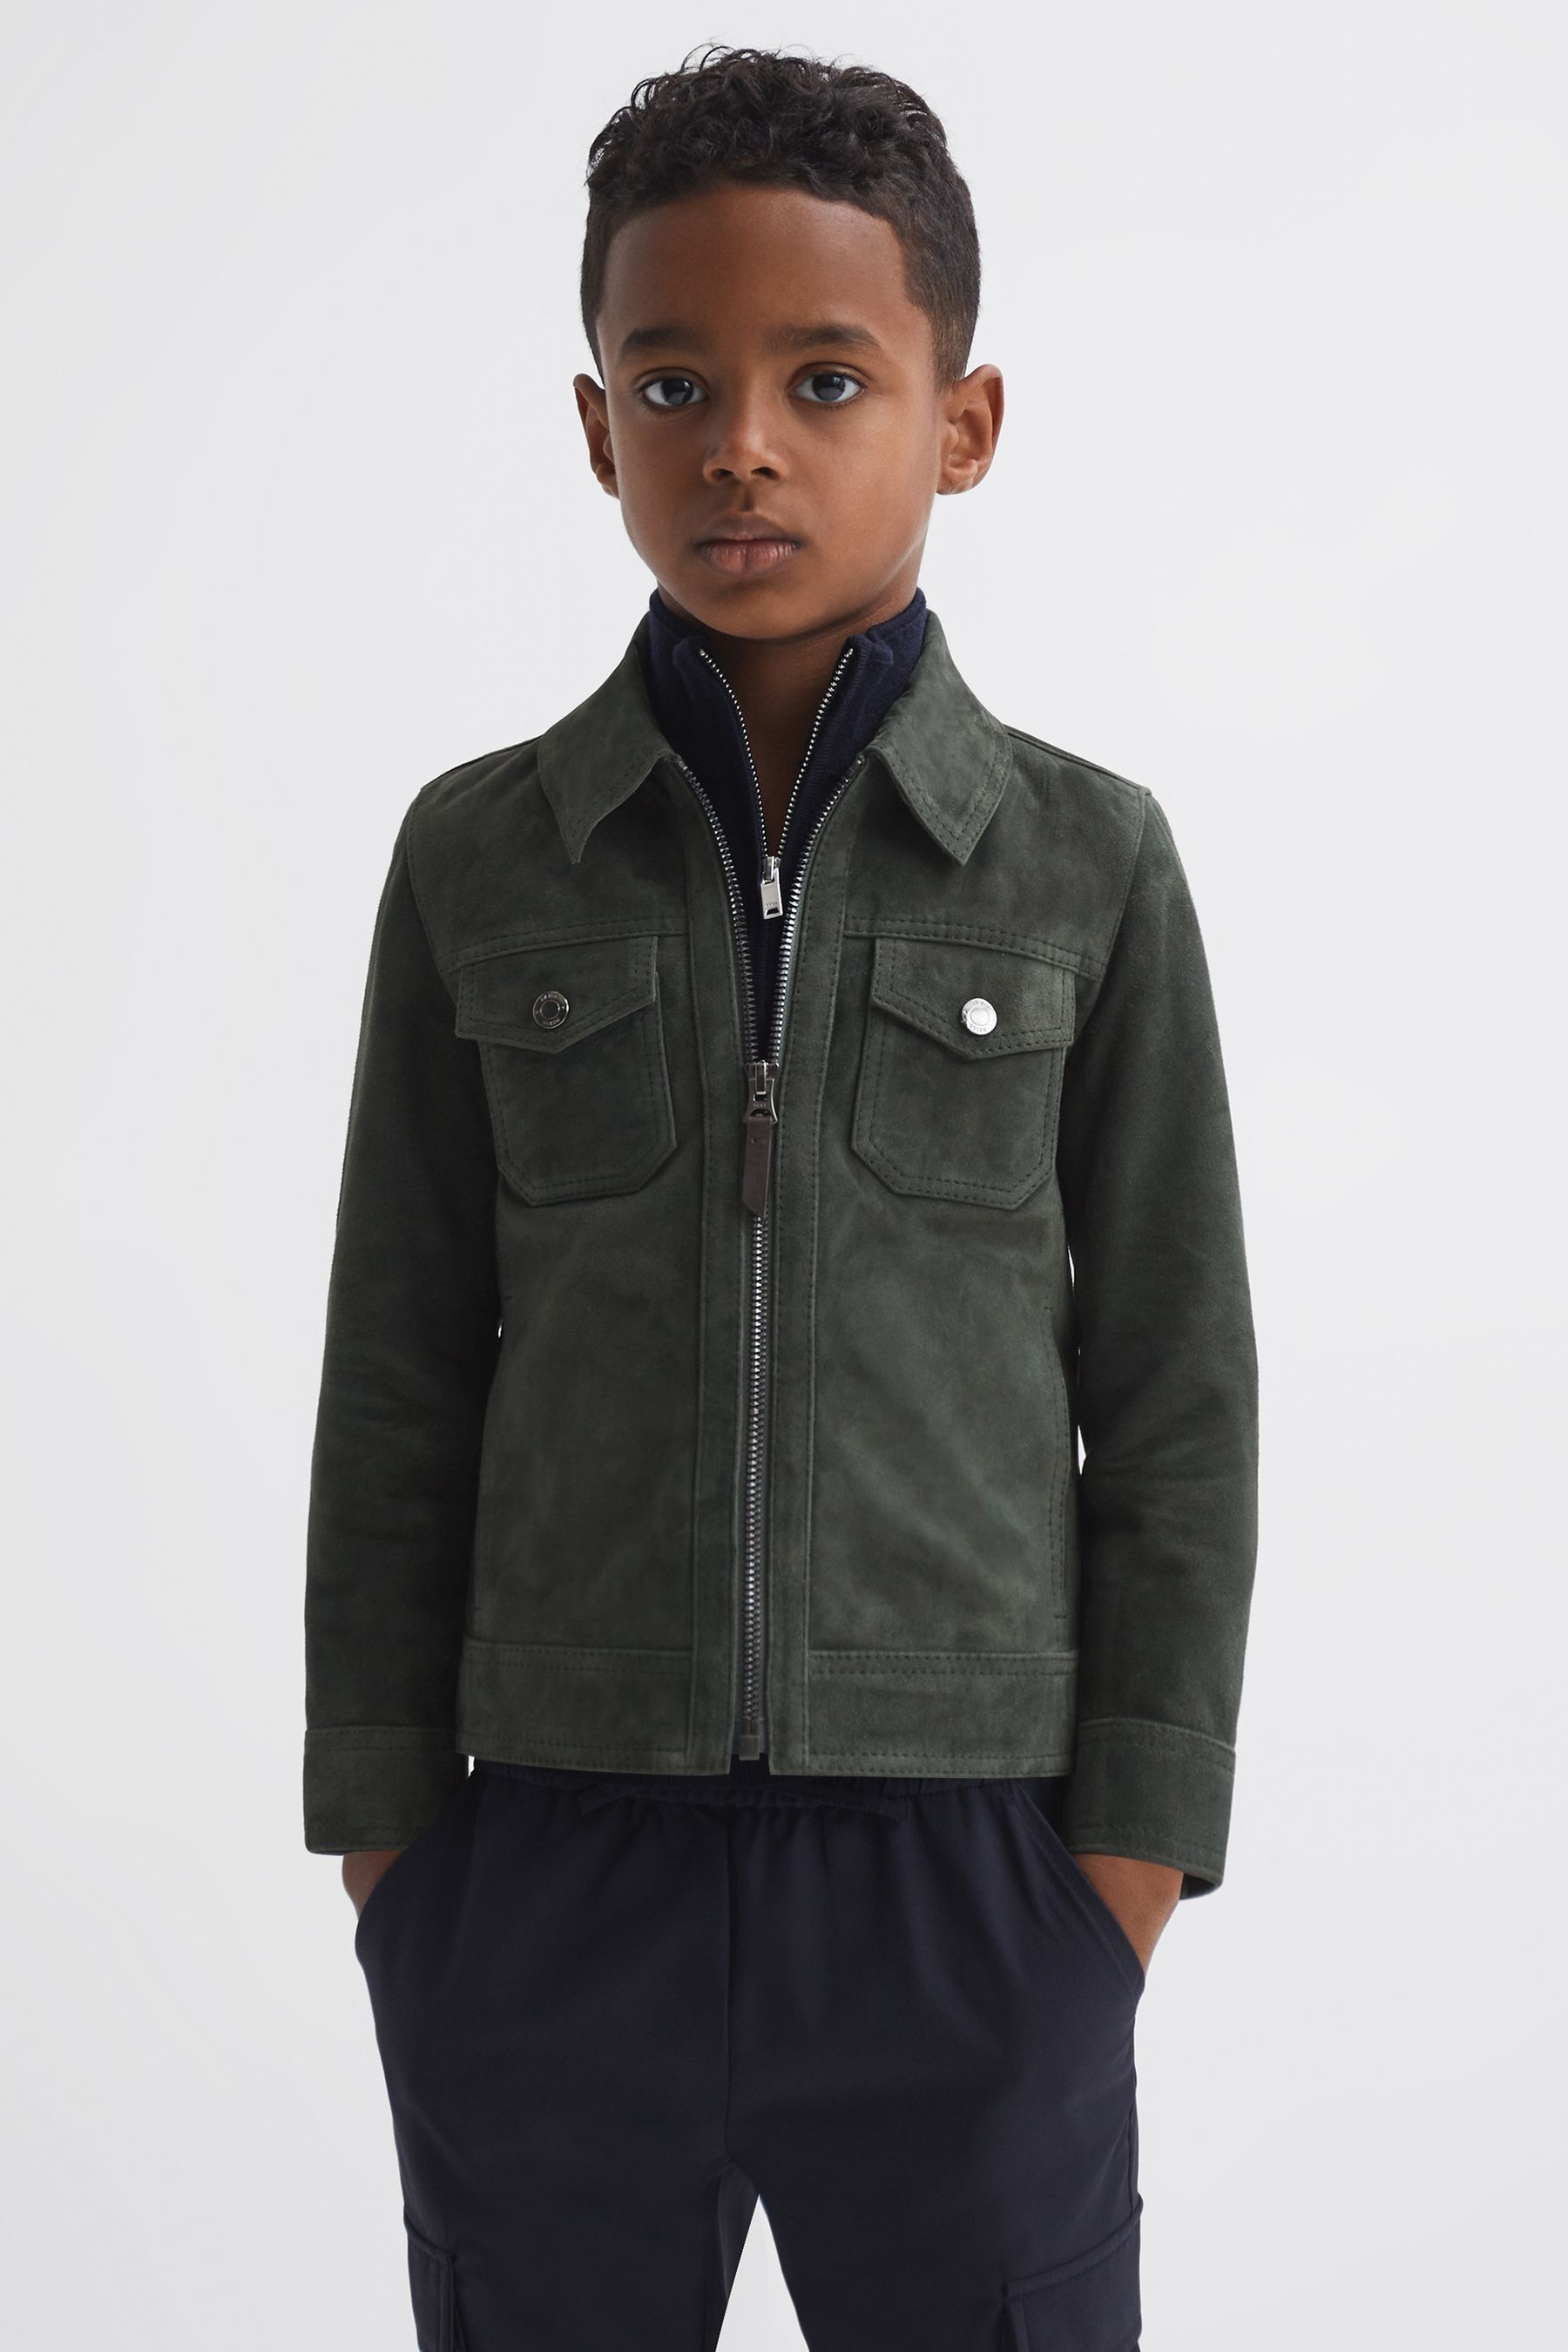 Reiss Kids' Pike - Forest Green Junior Suede Zip Through Jacket, Age 4-5 Years